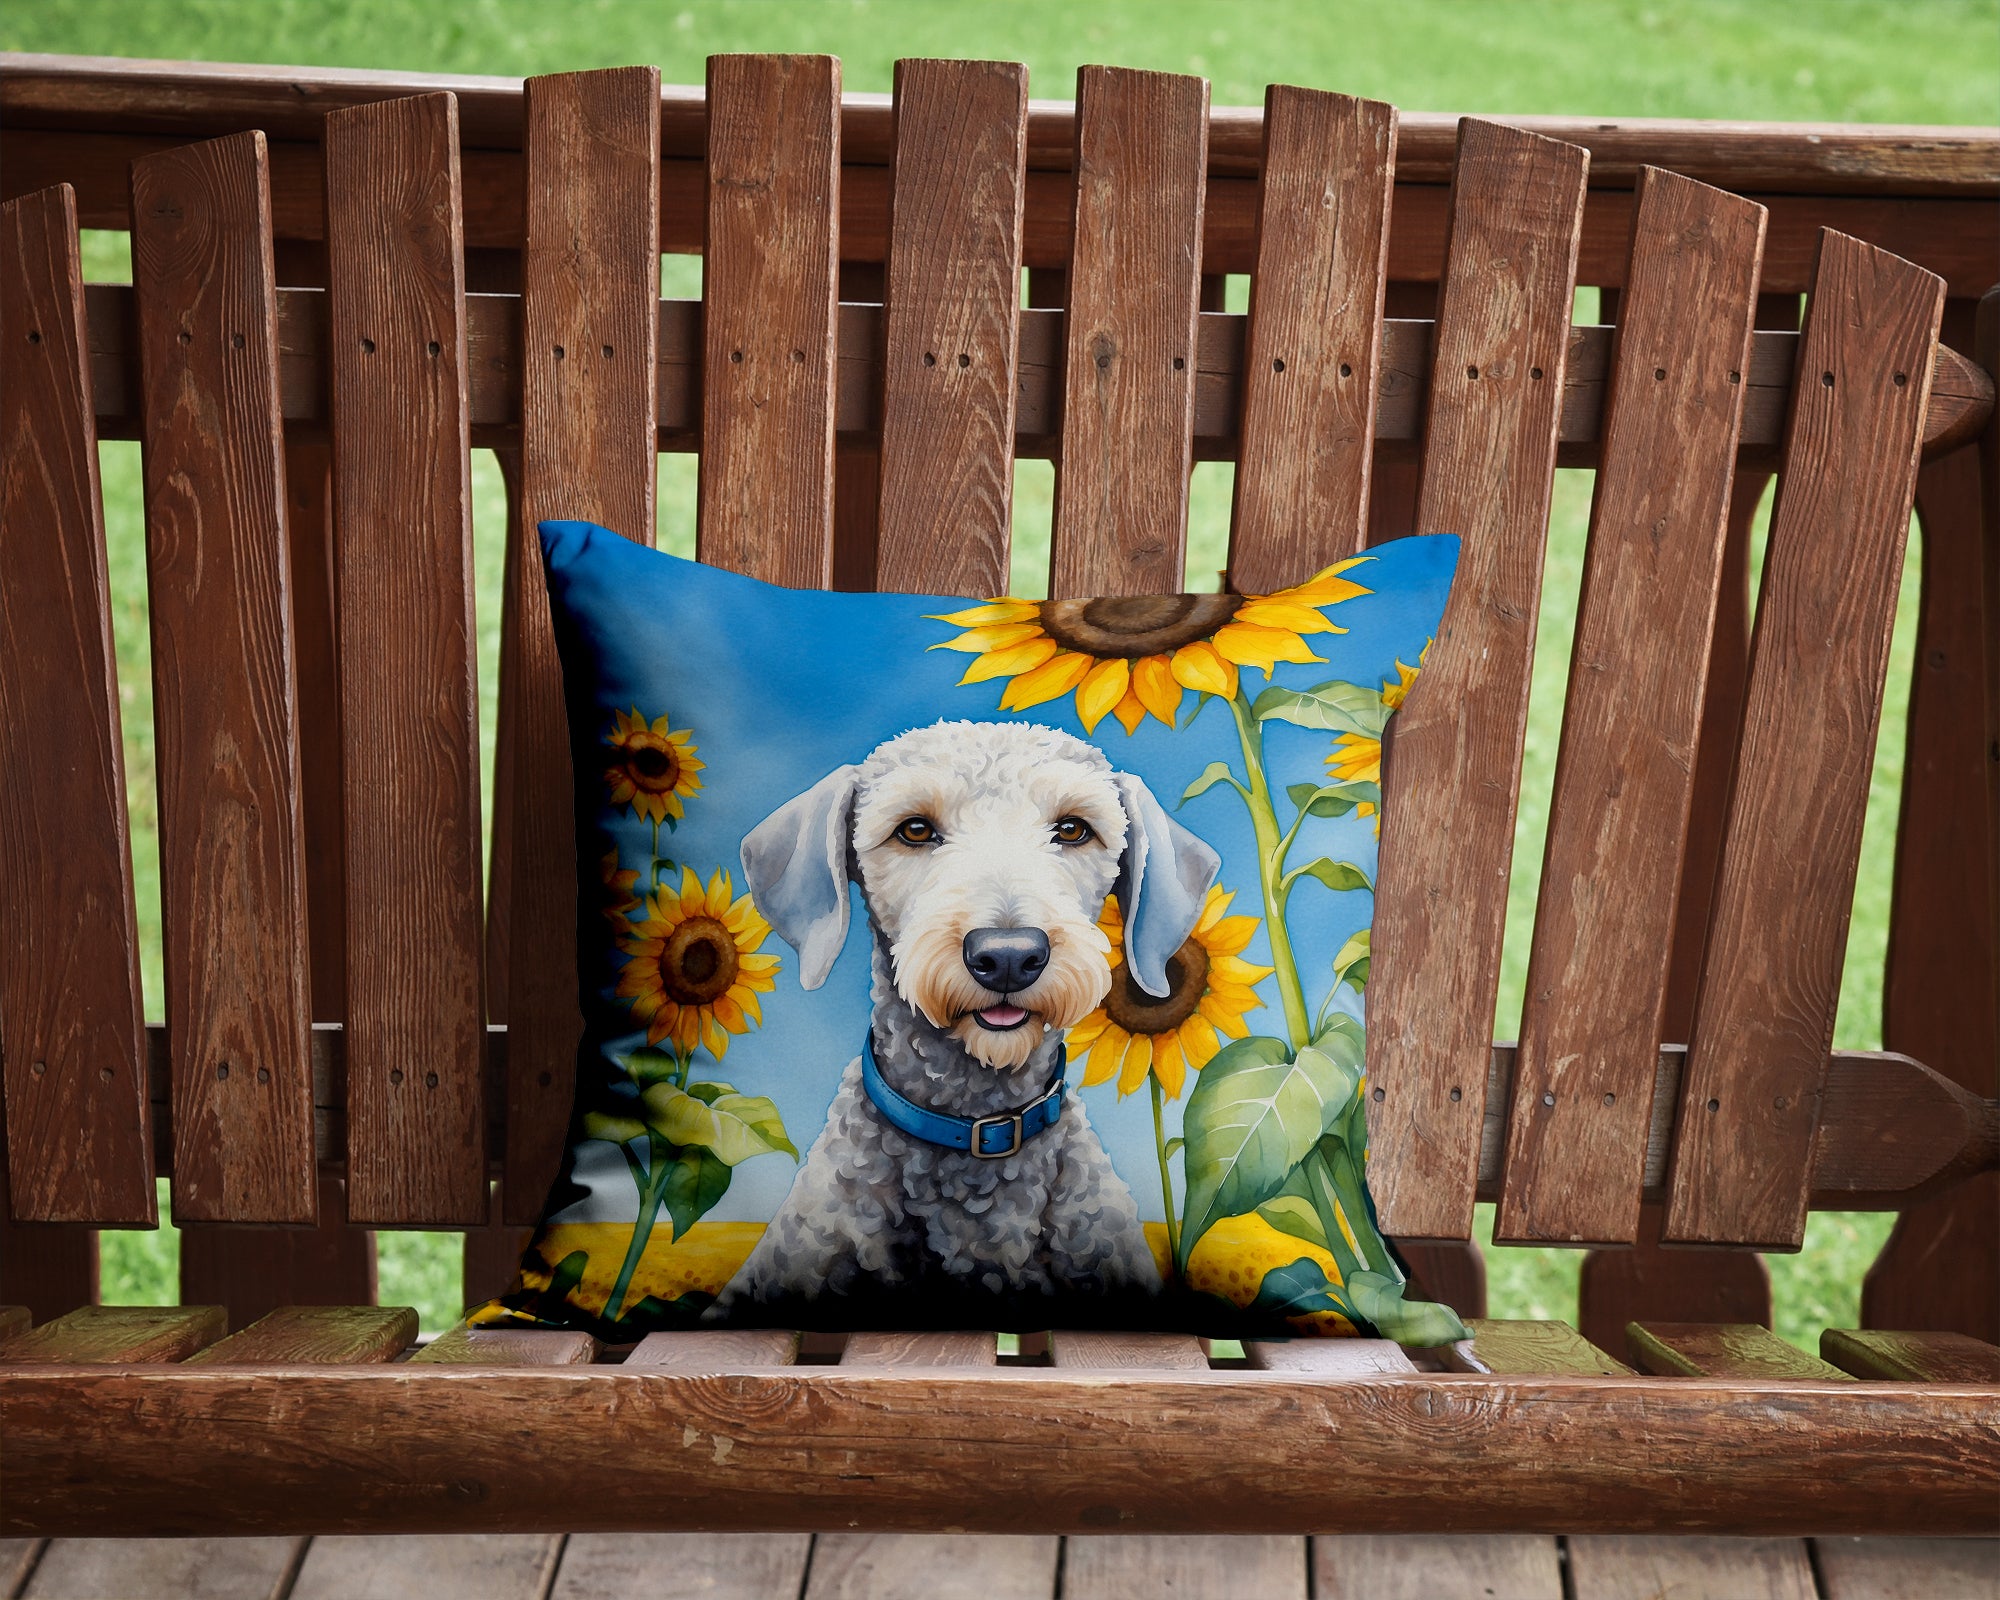 Buy this Bedlington Terrier in Sunflowers Throw Pillow